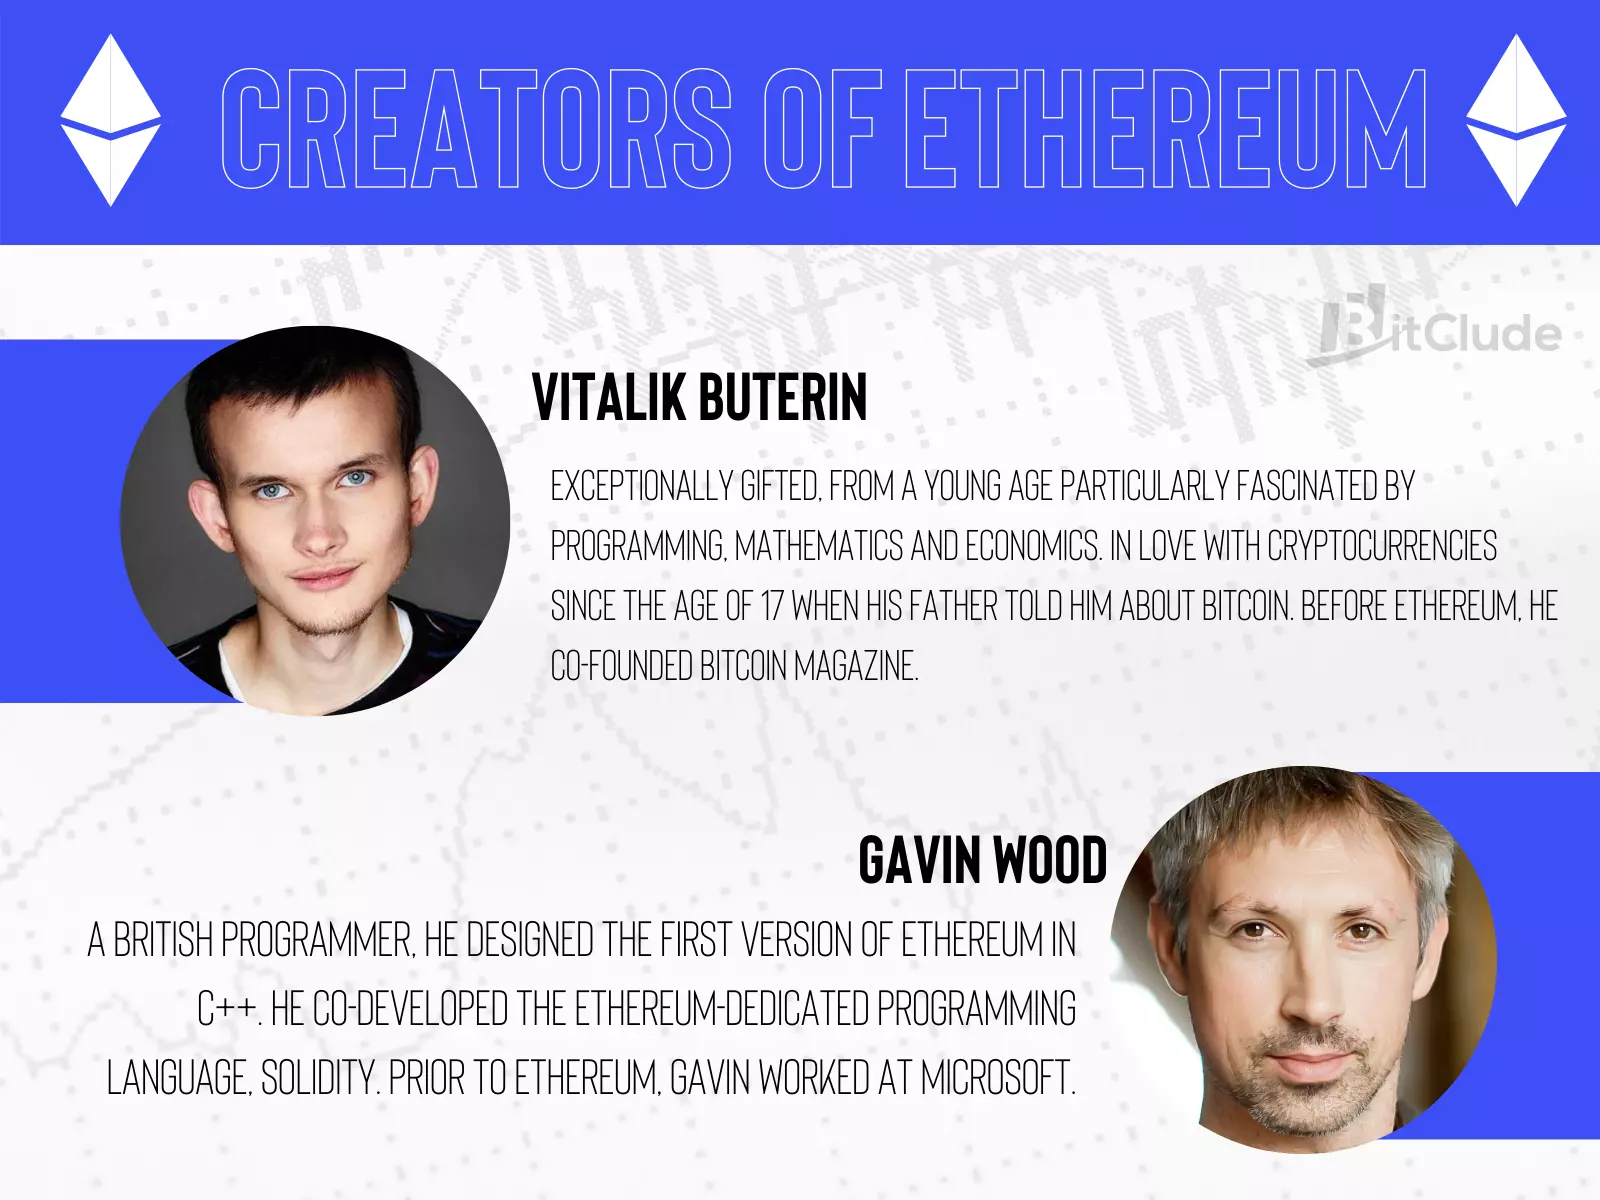 Ethereum Creators - Vitalik Biterin and Gavin Wood